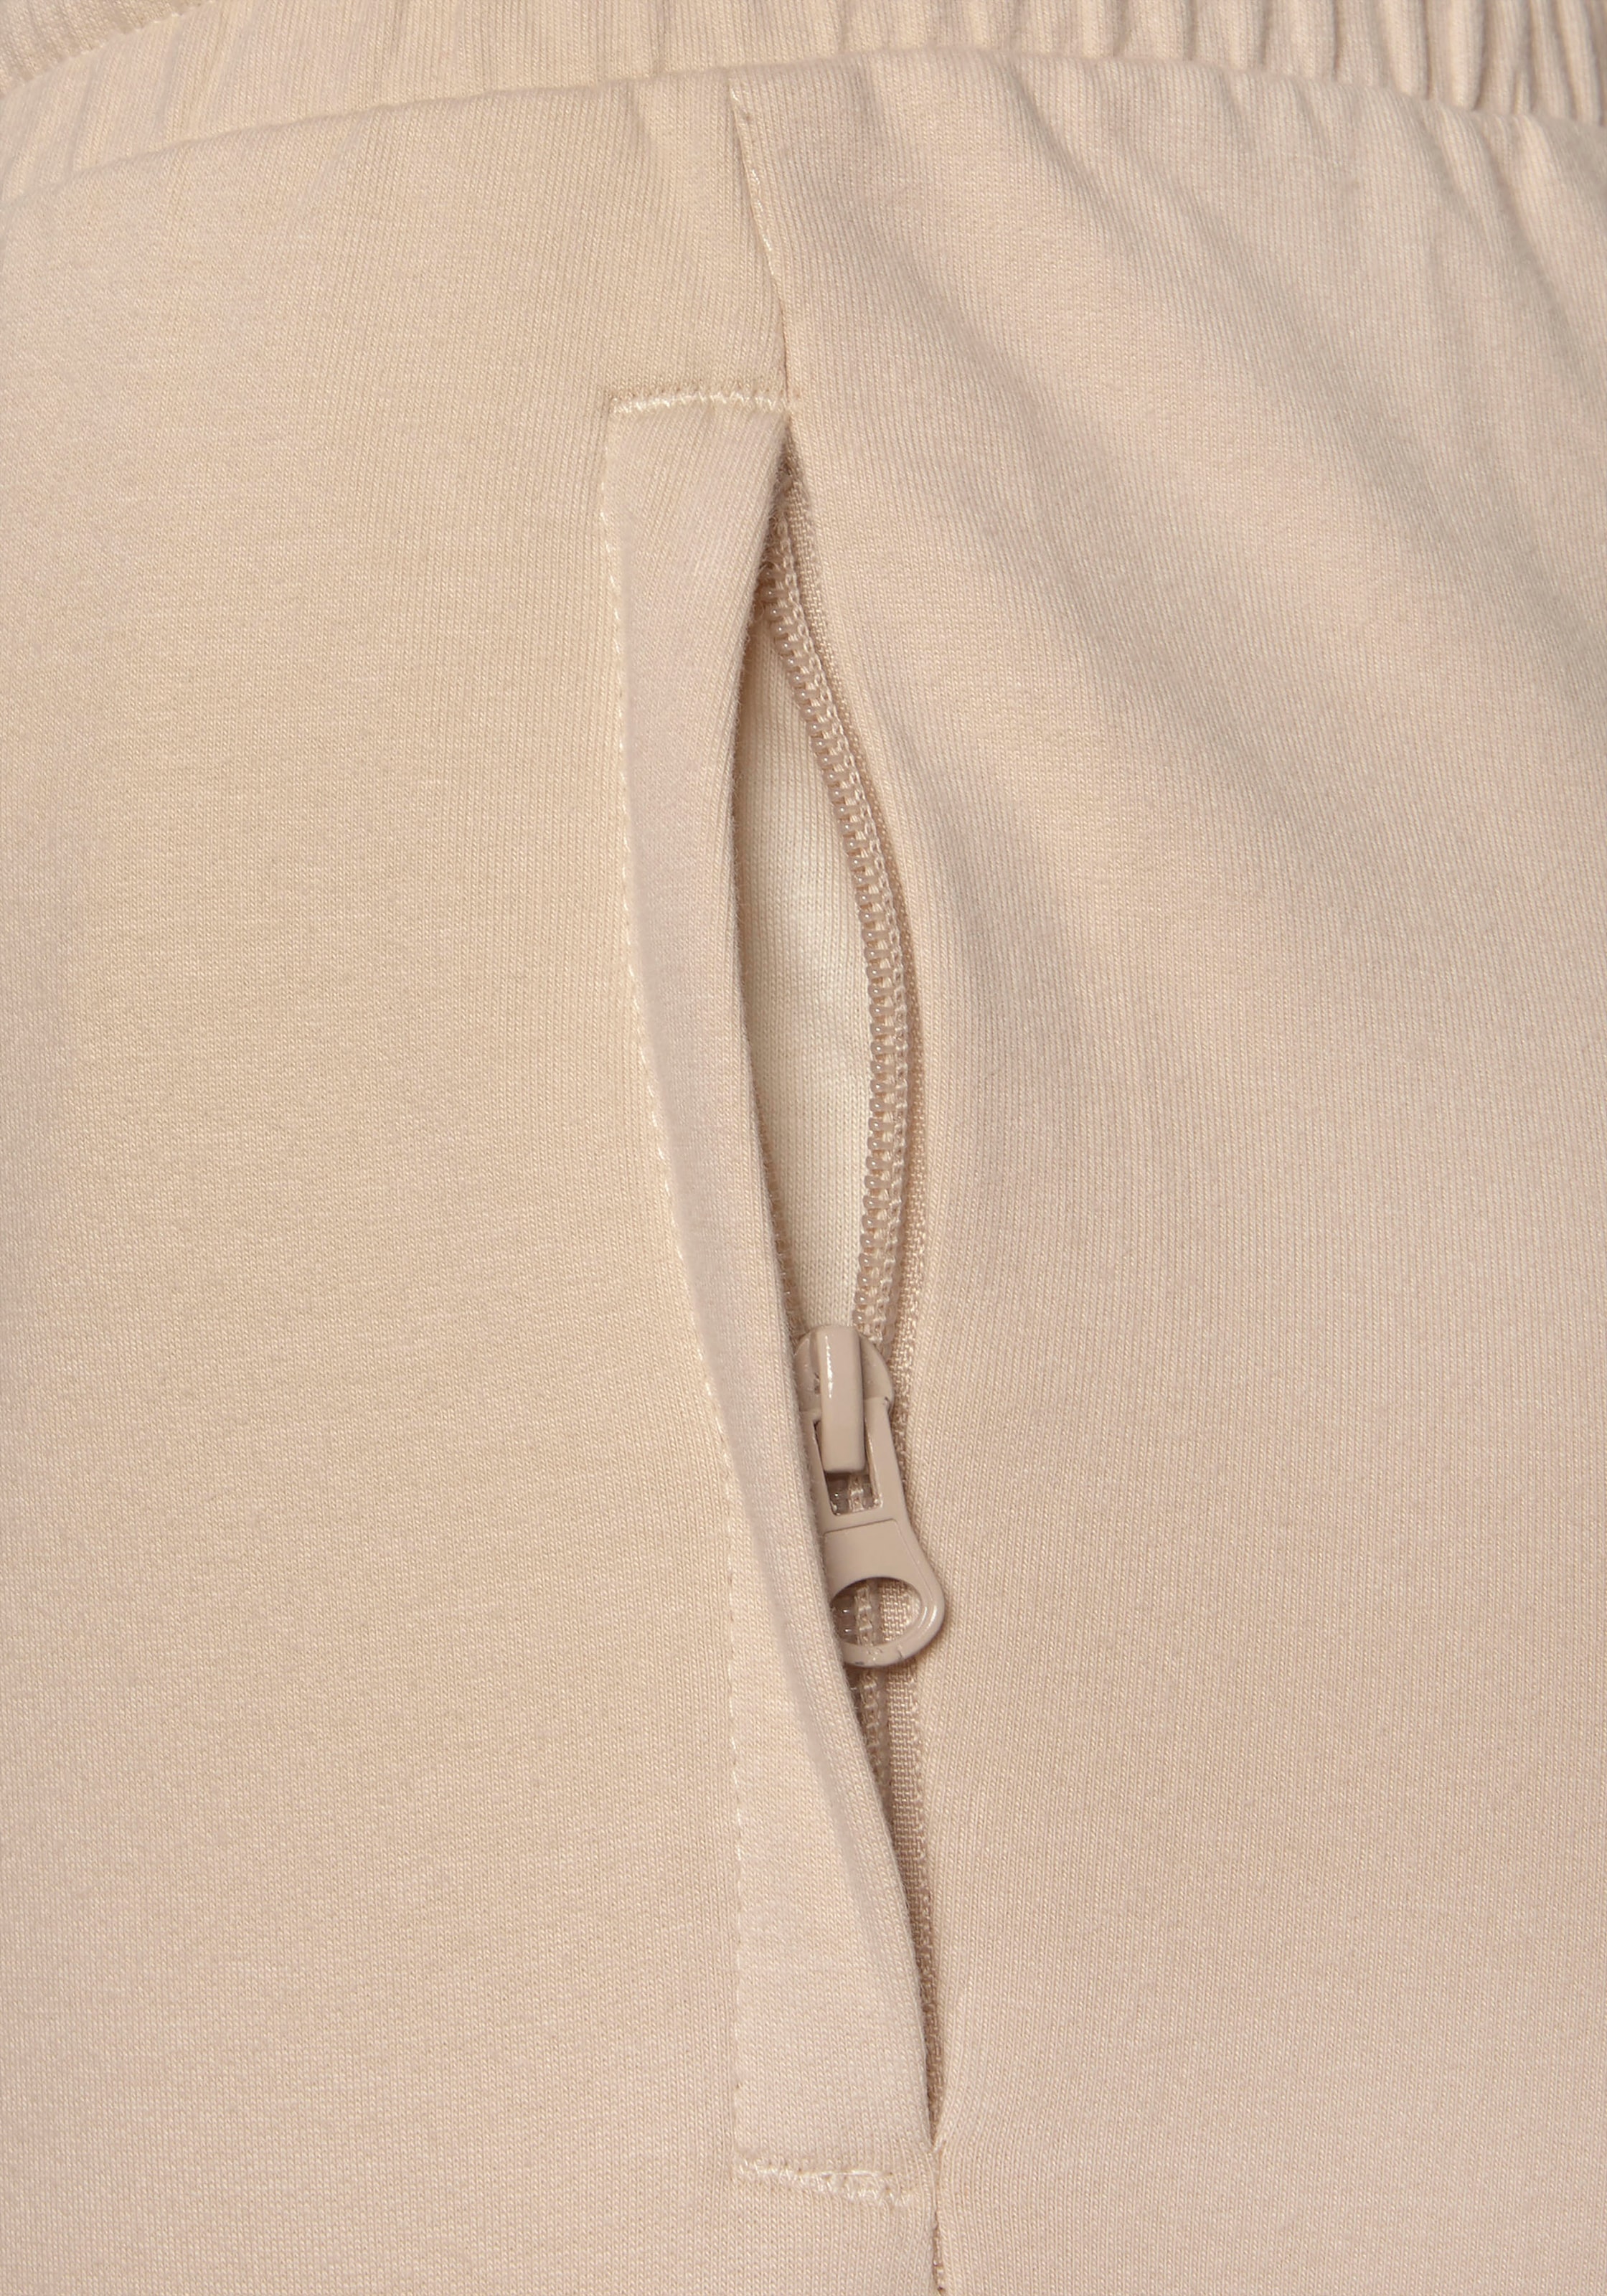 Bench. Loungewear Homewearhose, mit Reißverschluss Taschen, Loungeanzug